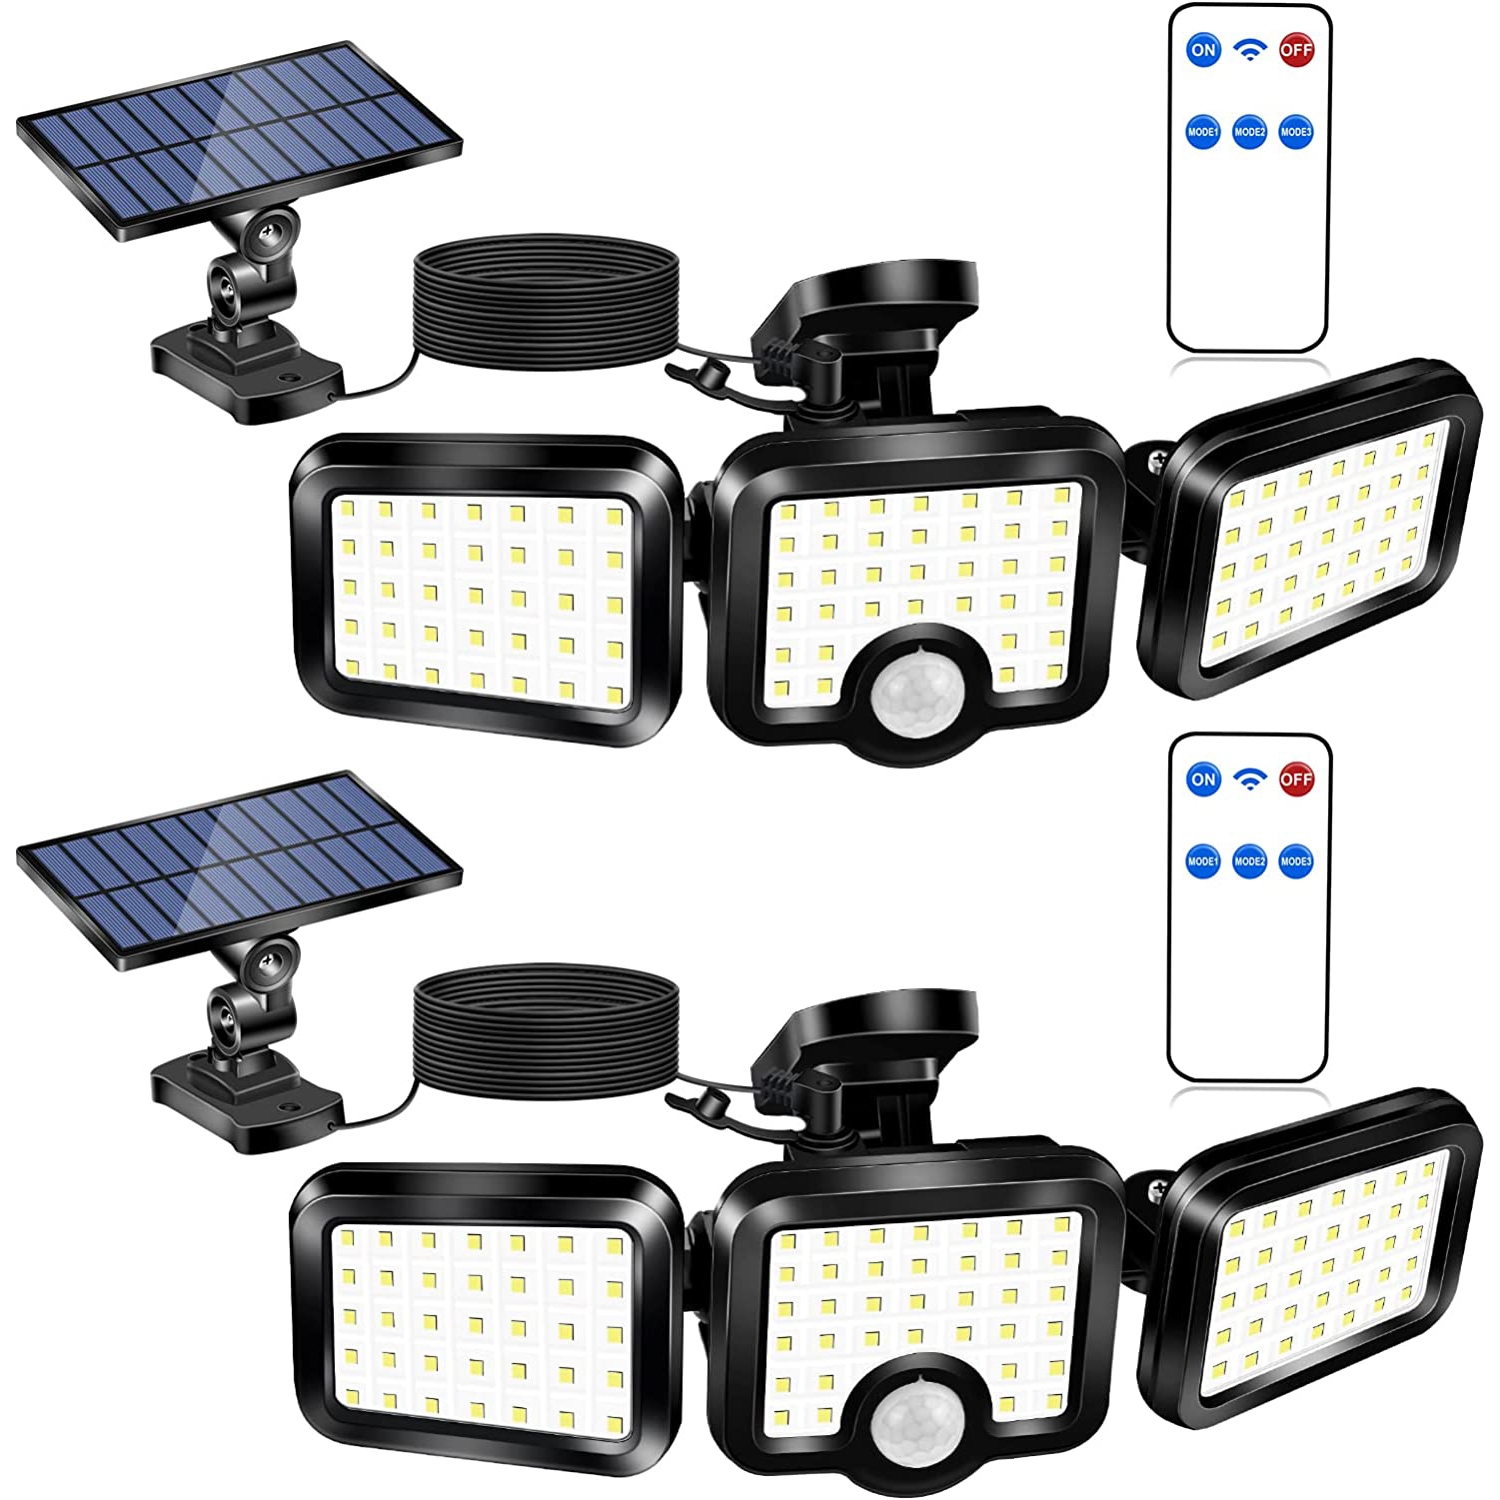 Kunova (TM) UV Flashlight Black Light 12 LED 395nm Hand-held Detecting Torch for Pet Urine, Stains, Verifying Money Documents, Batteries Not Included, Black